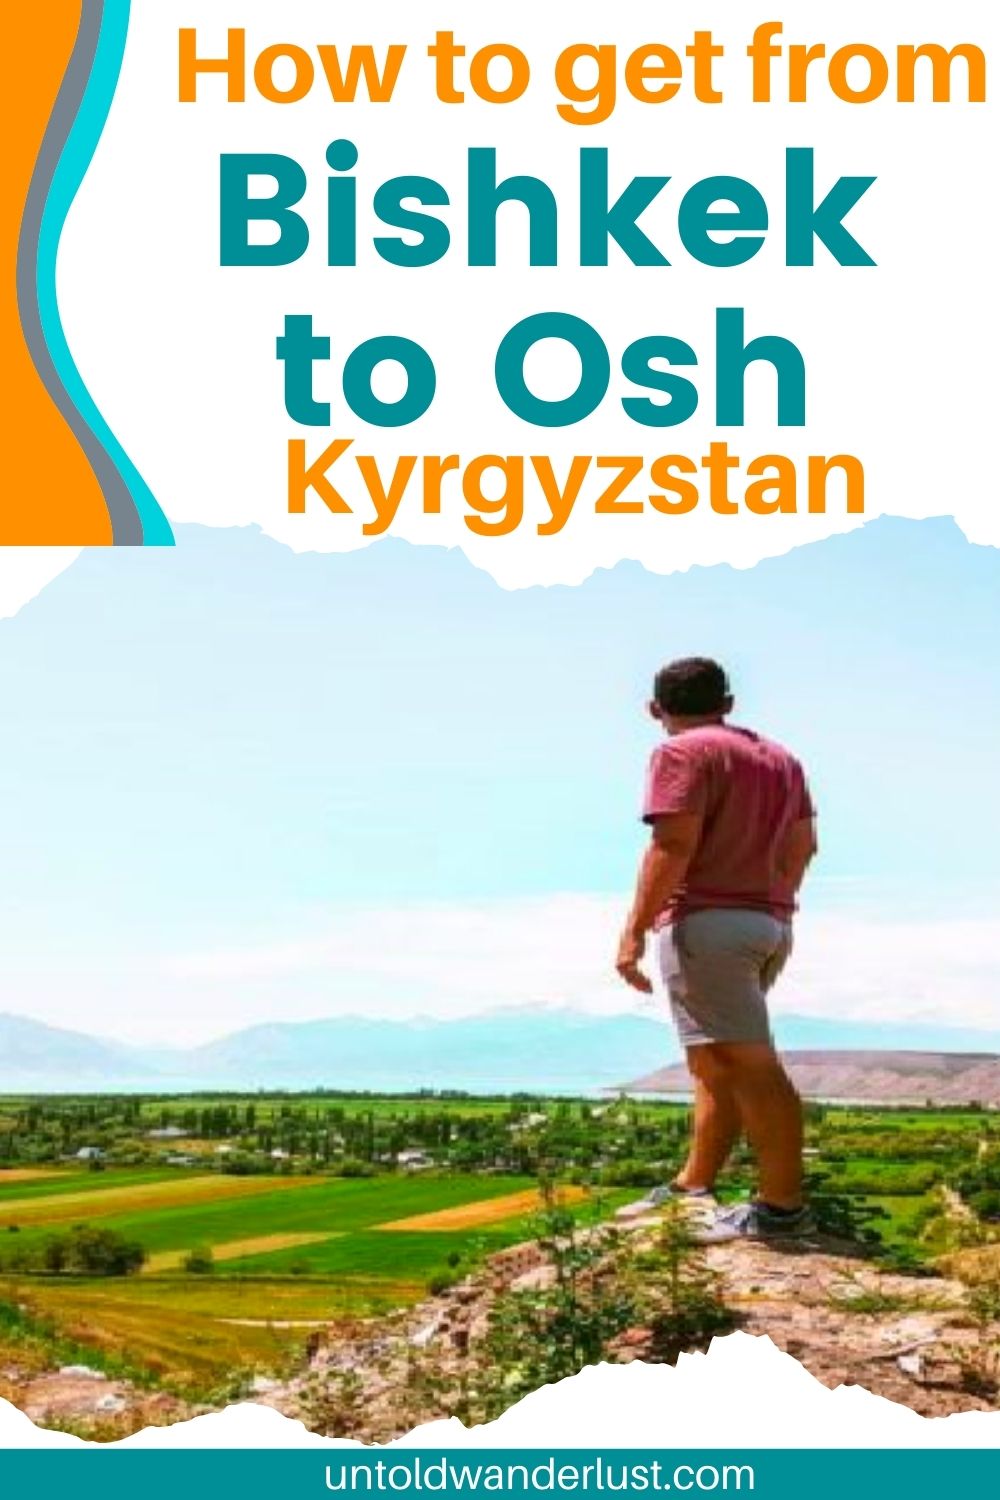 The Best Way to get from Bishkek to Osh in Kyrgyzstan